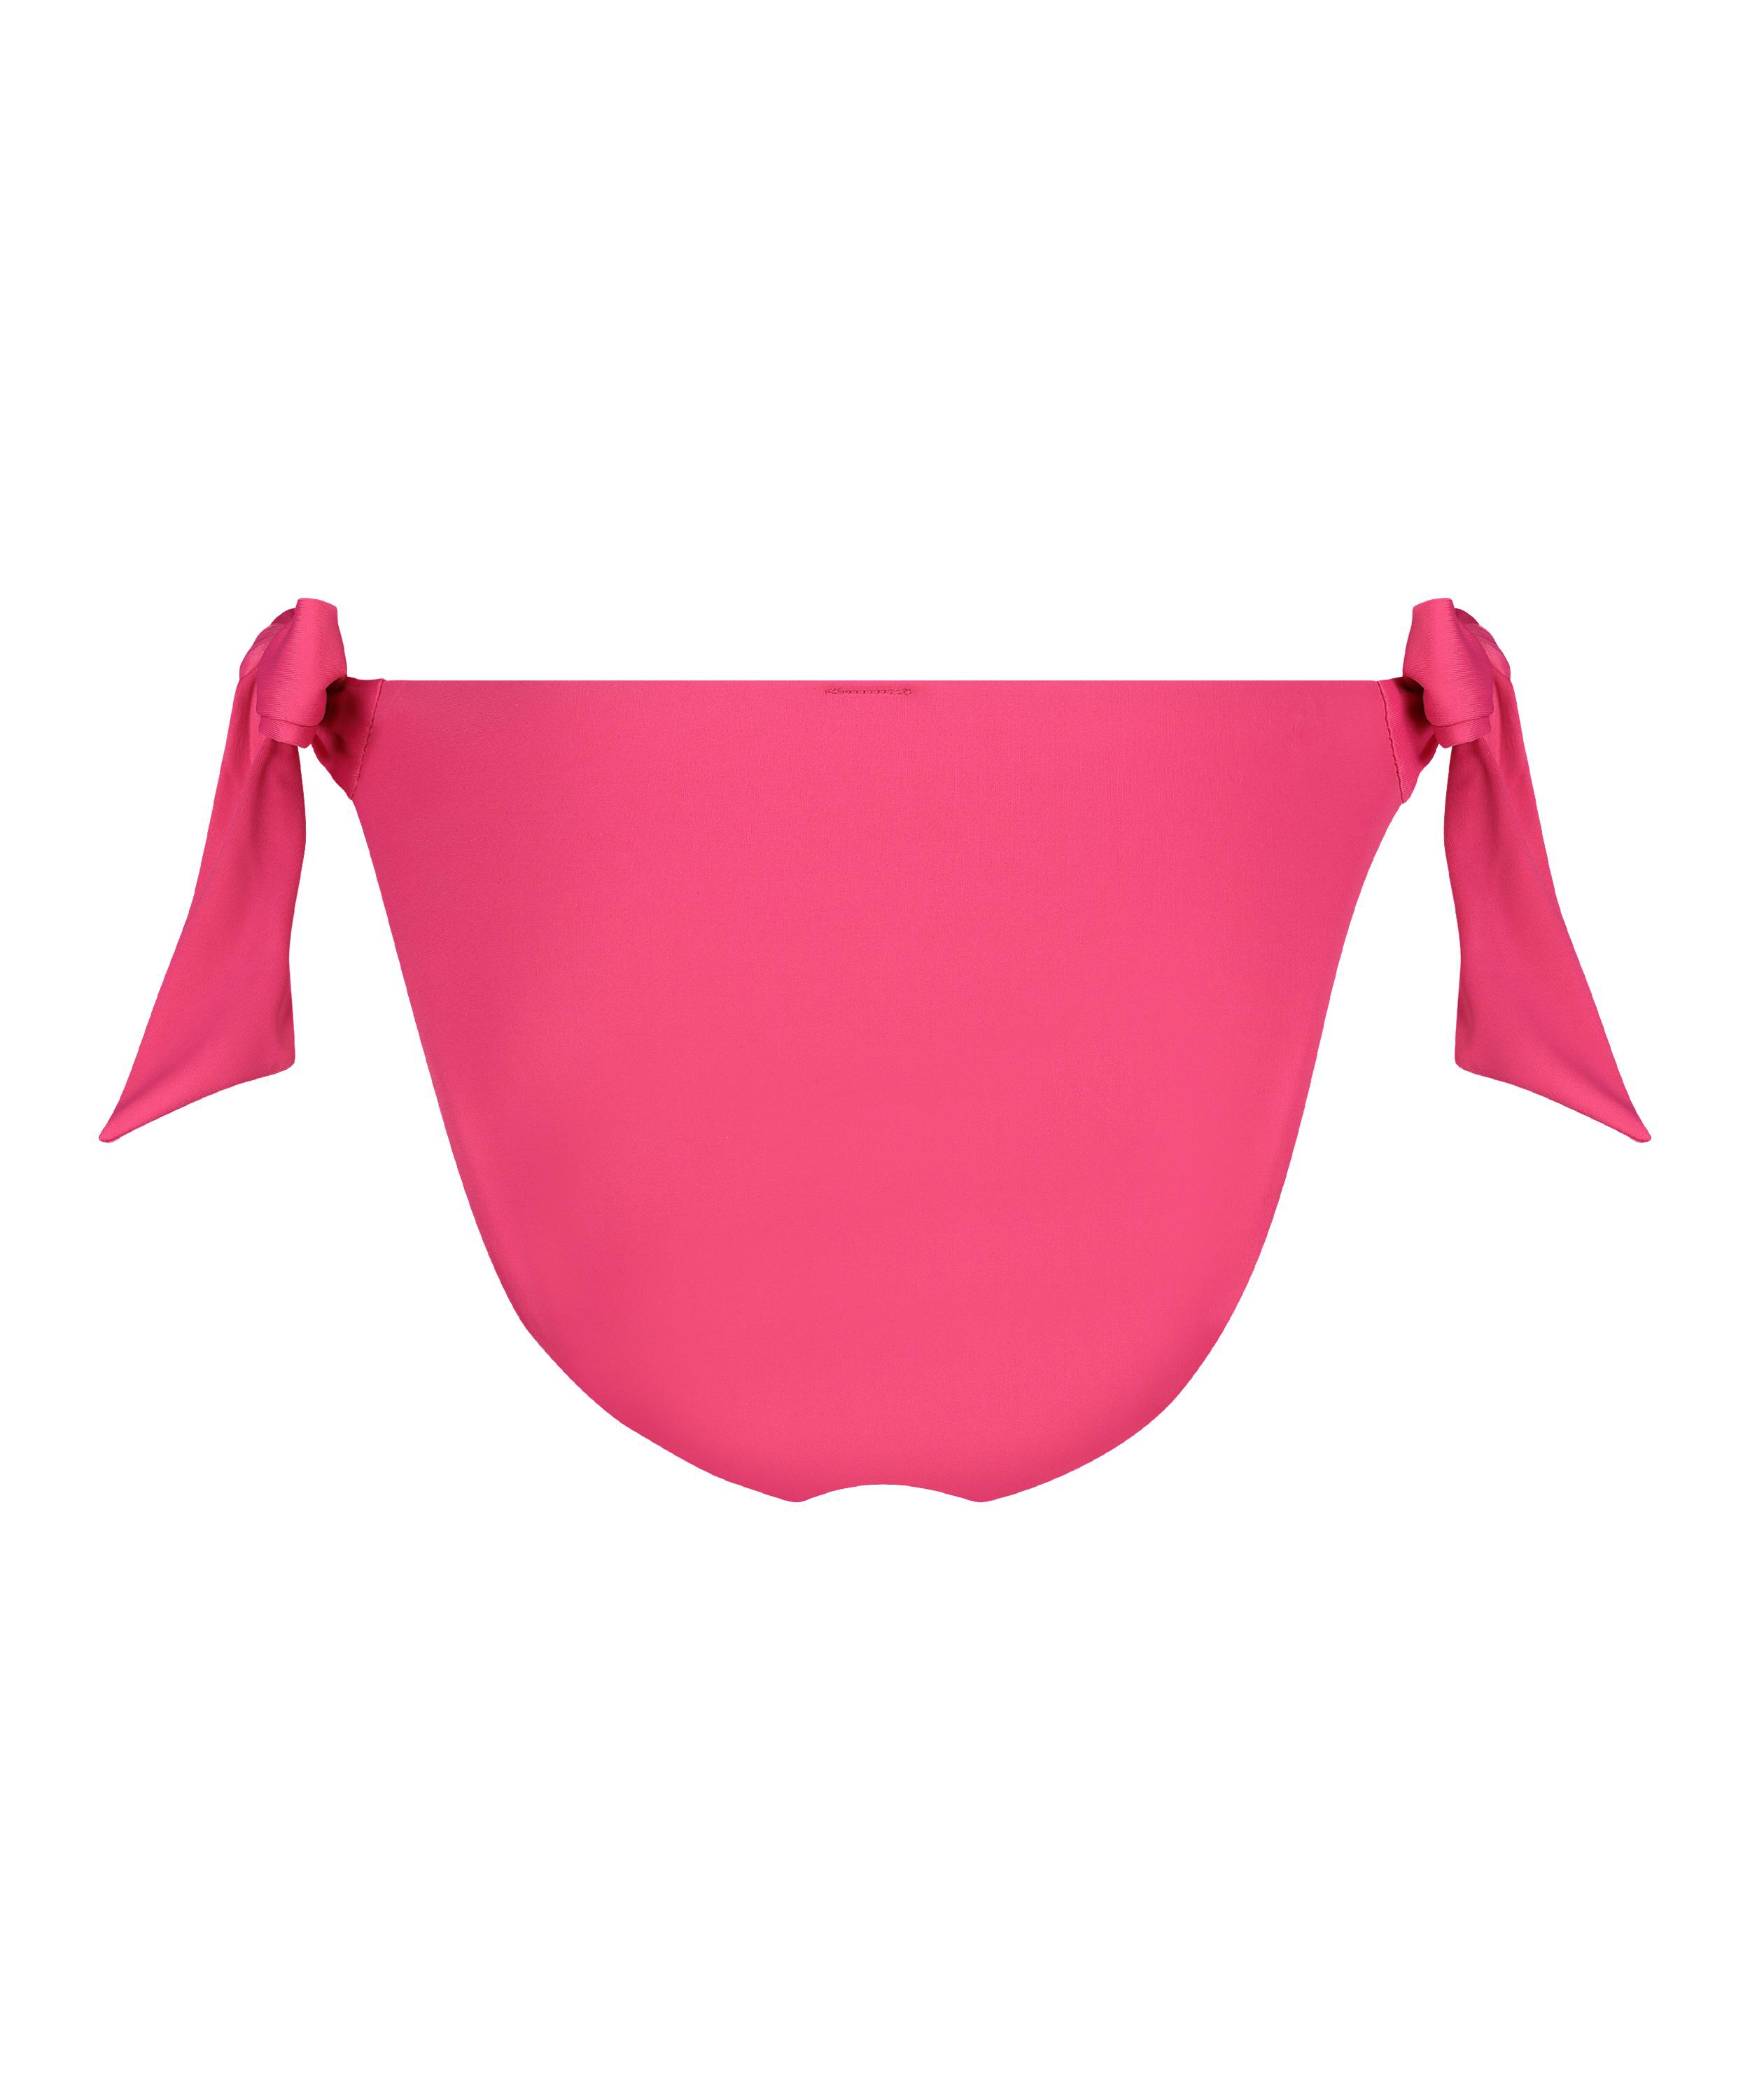 Luxe Rio Bikini Bottoms, Pink, main